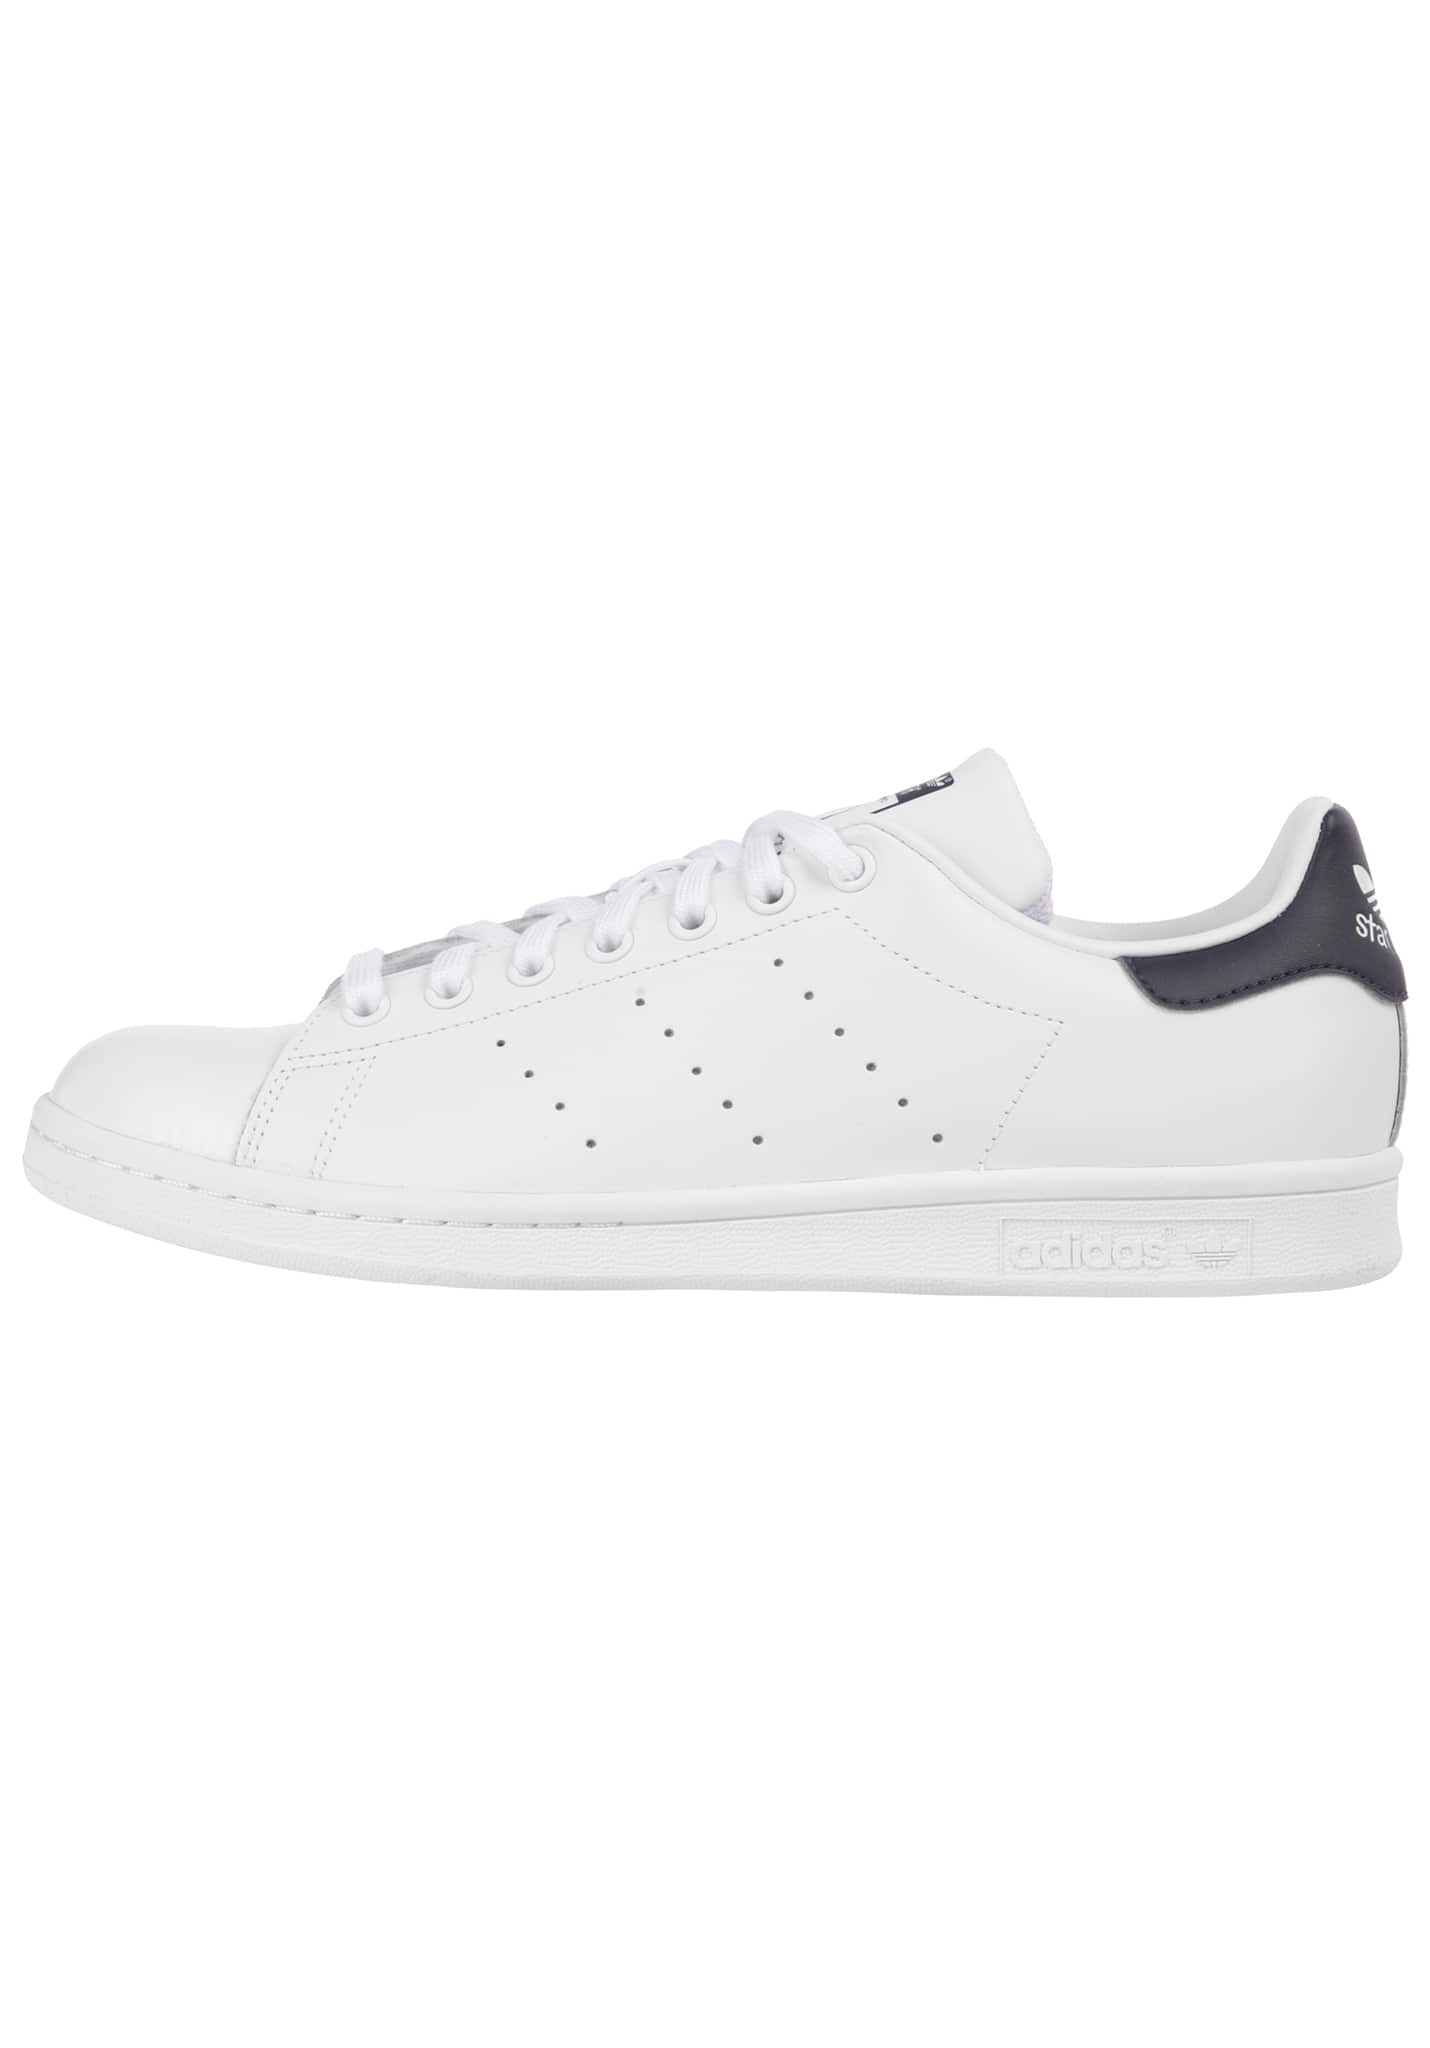 Adidas Originals Stan Smith Sneaker corewhite/corewhite/darkblue 42,5